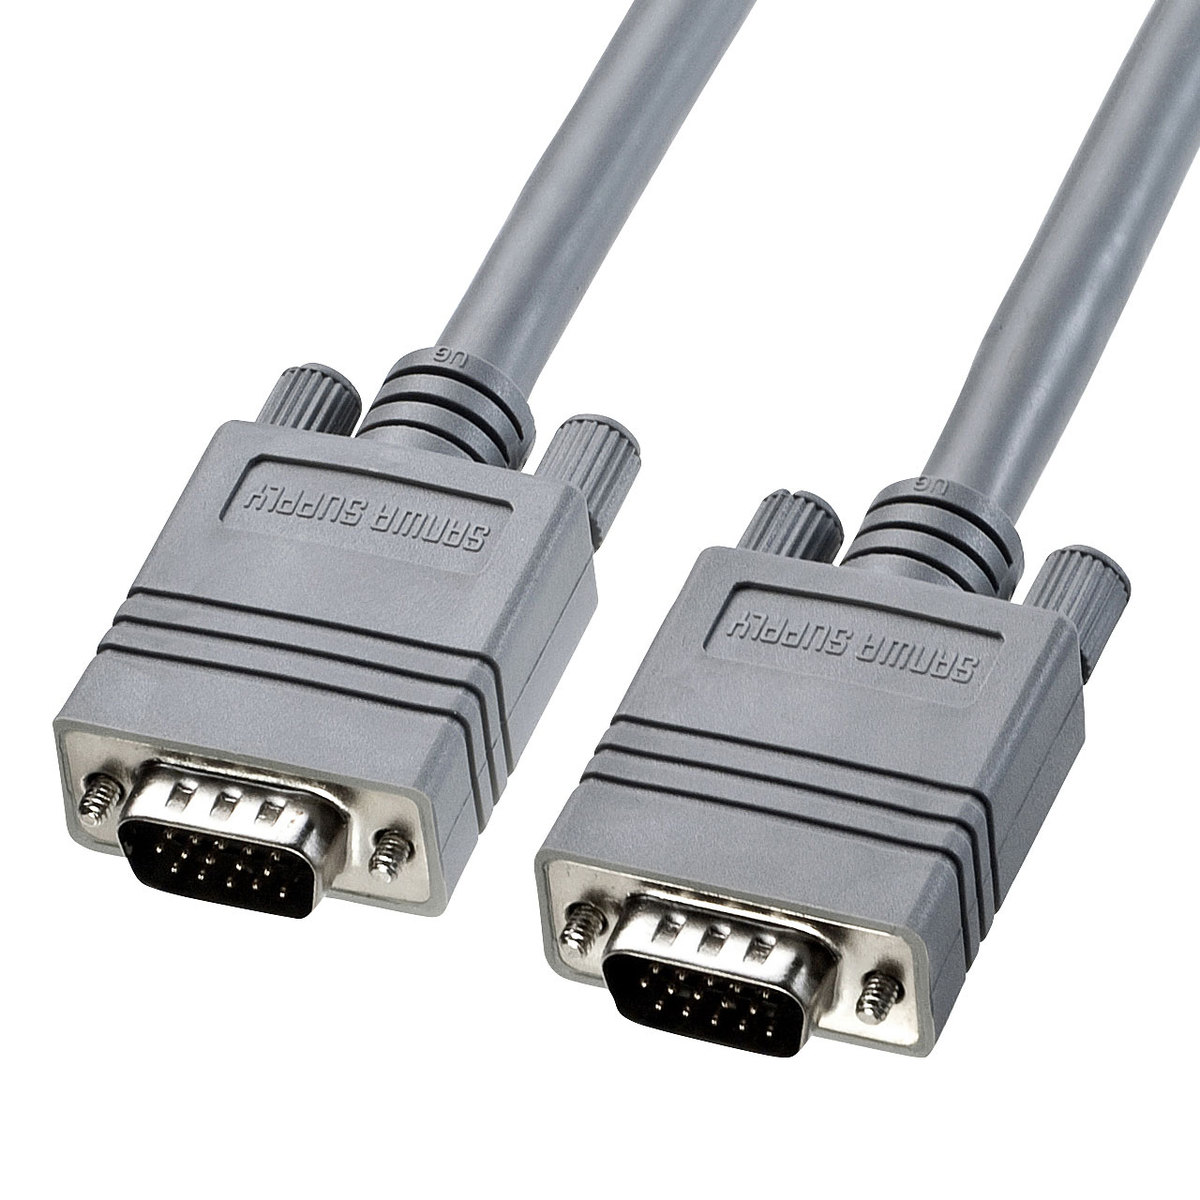 Display Cable (Compound Coaxial / Analog RGB), KB-CHD Series (KB-CHD1510K2) 